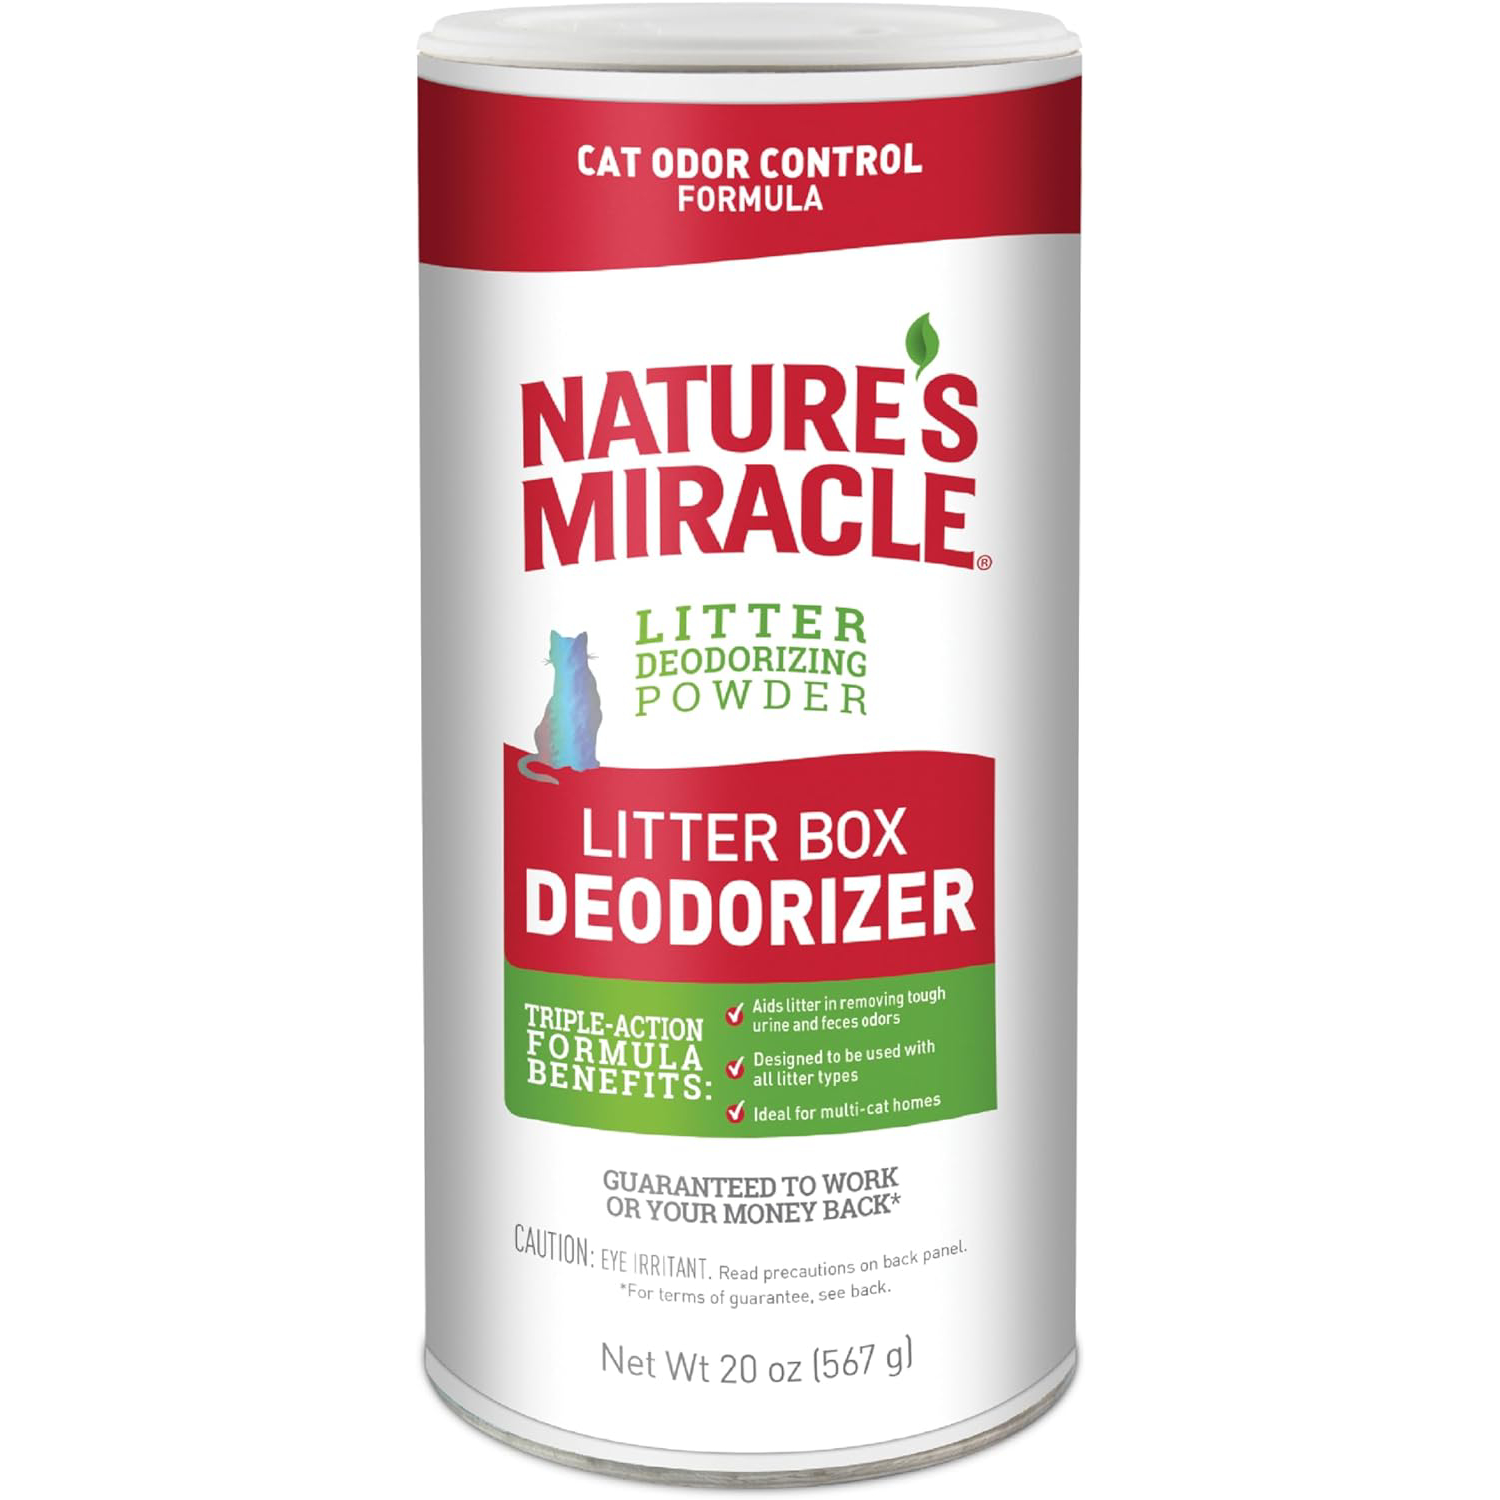 Nature’s Miracle Litter Box Deodorizer, 20 oz, Litter Deodorizing Powder